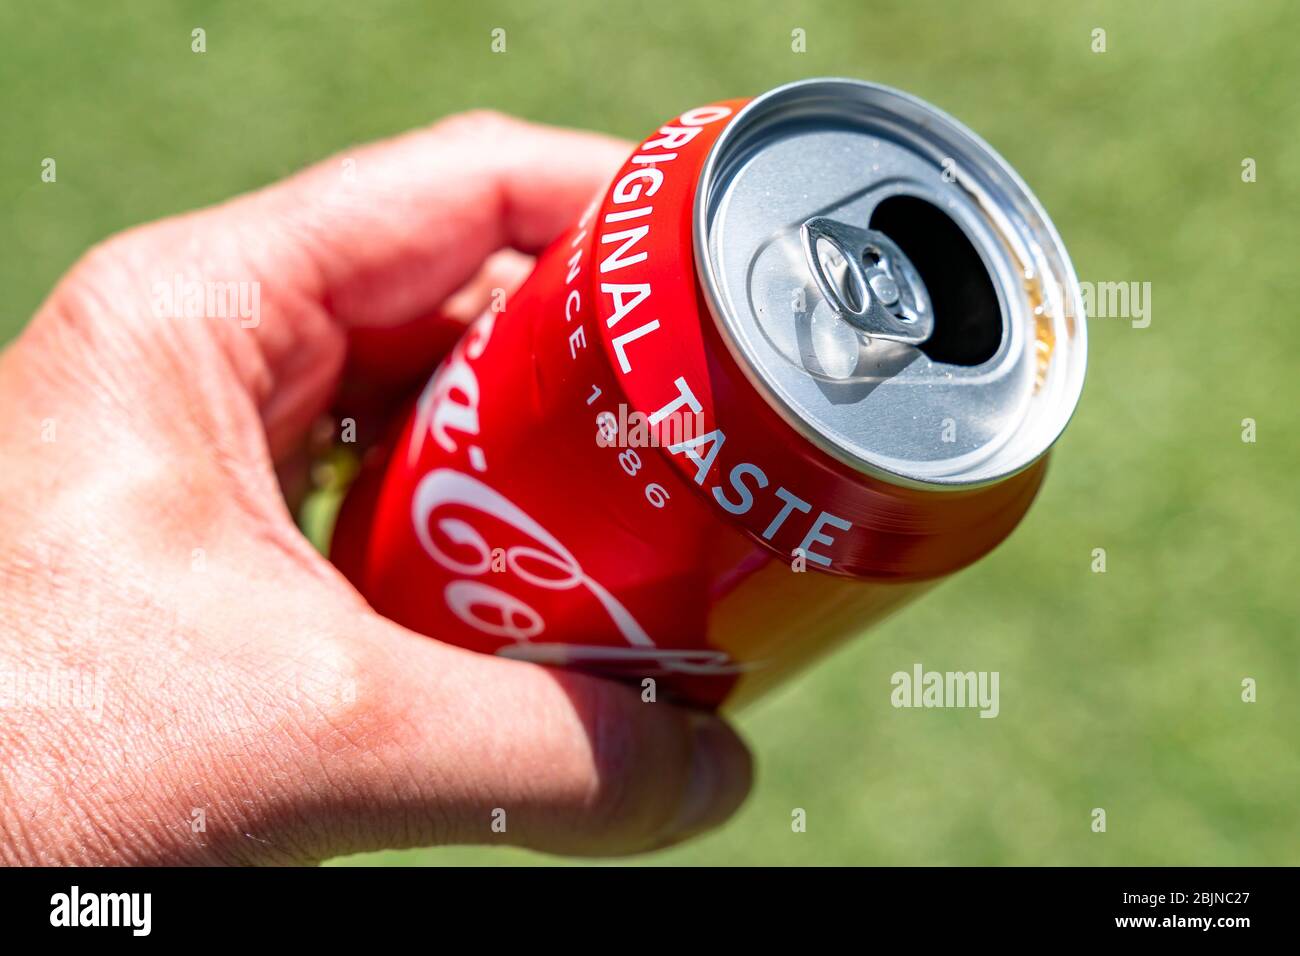 OOSTERHOUT, , 30-04-2020, dutchnews, Cans of soda / Blikjes frisdrank Stock Photo - Alamy